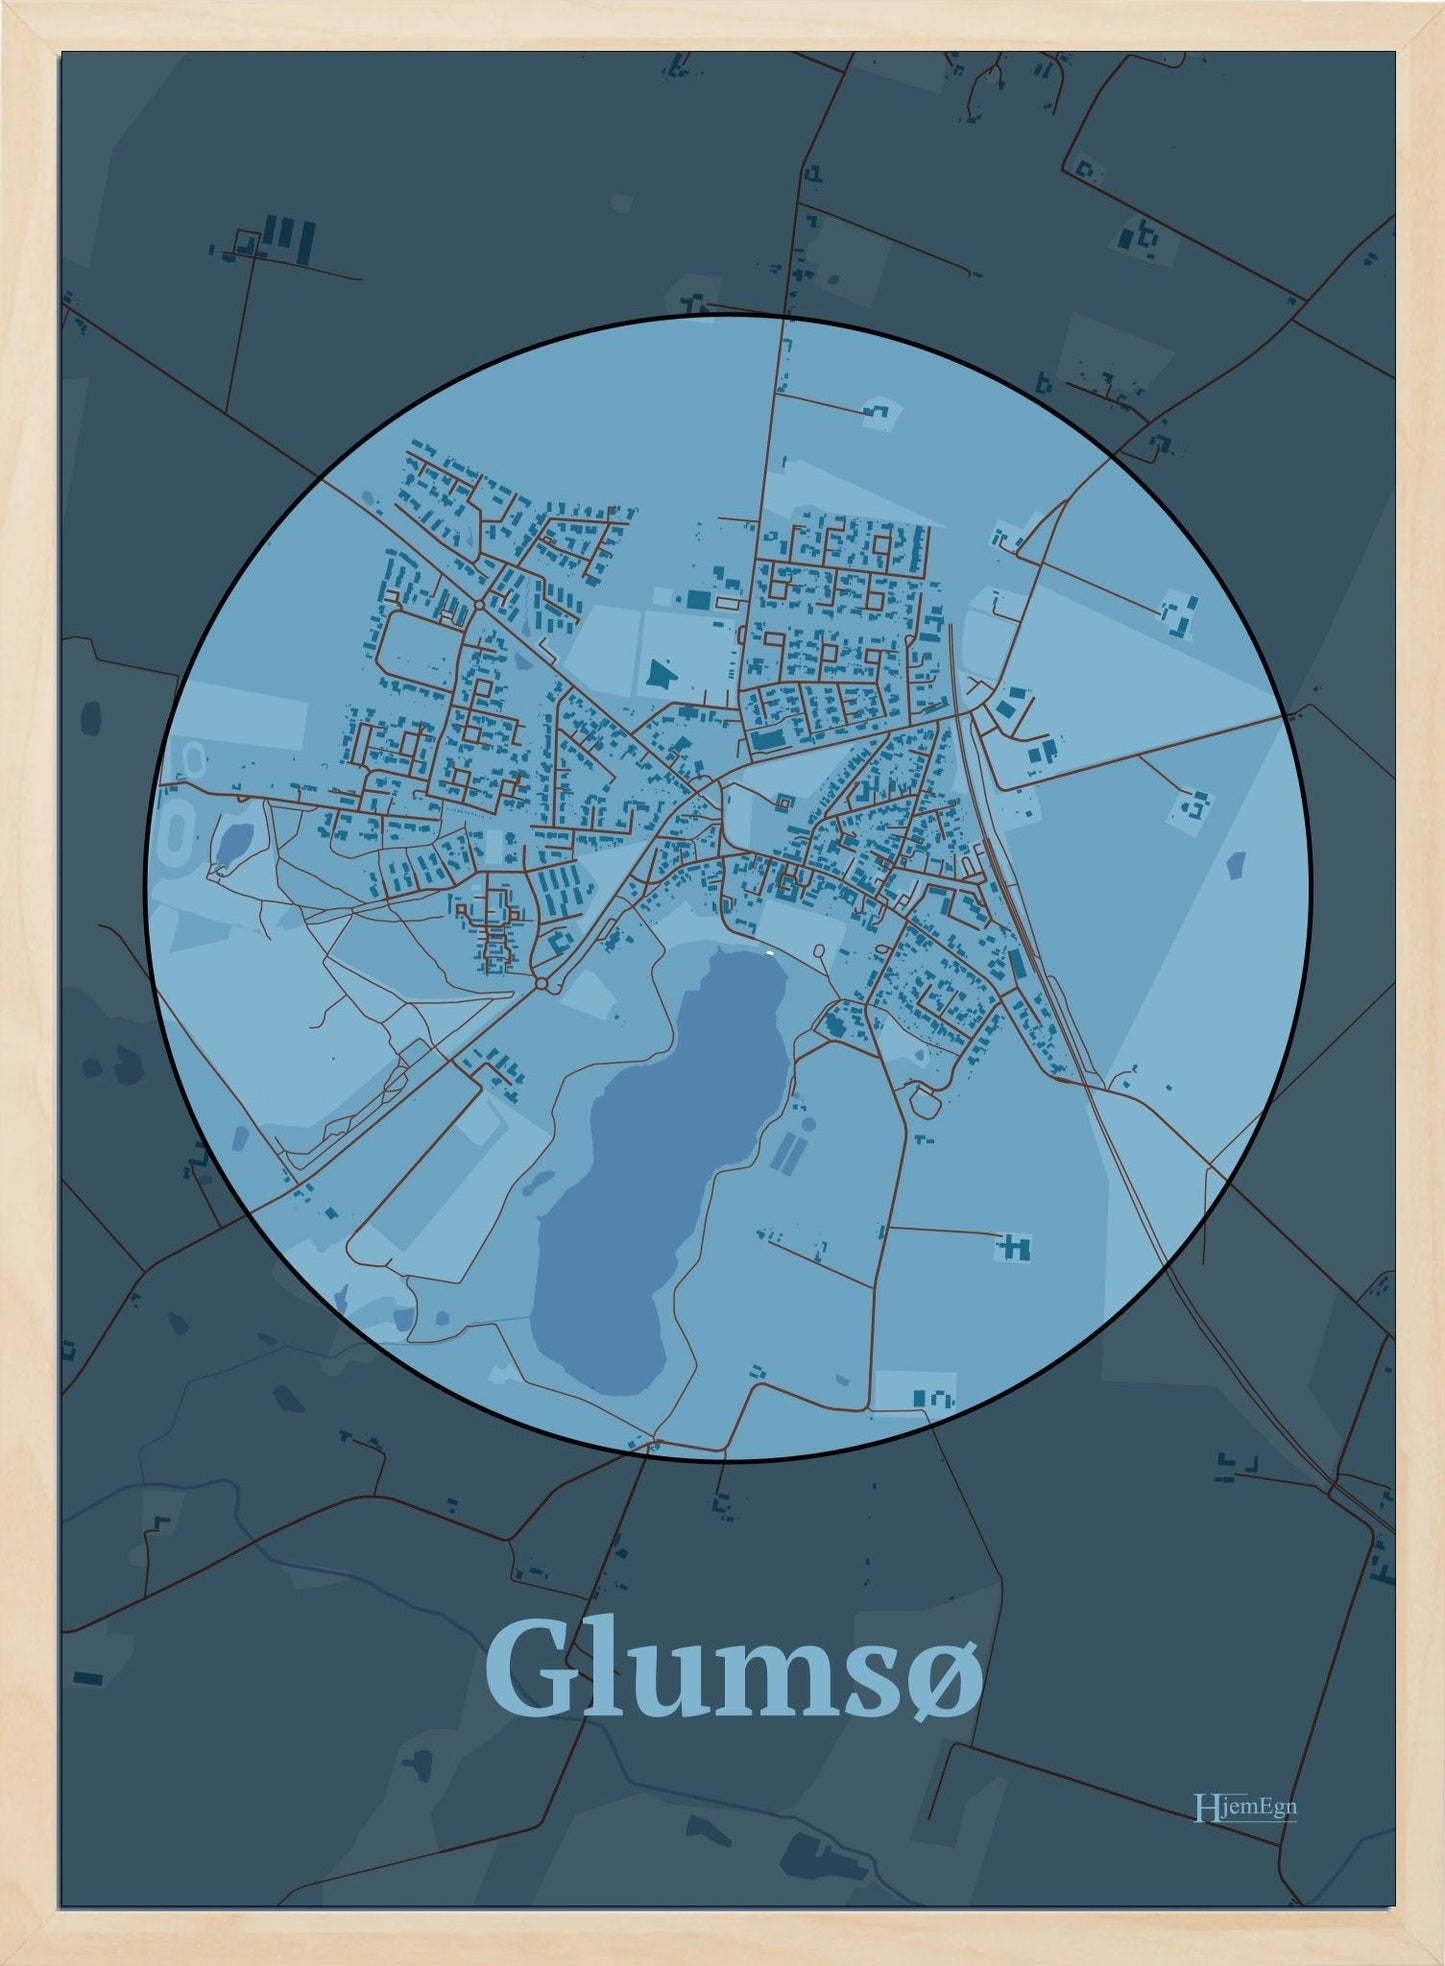 Glumsø plakat i farve pastel blå og HjemEgn.dk design centrum. Design bykort for Glumsø